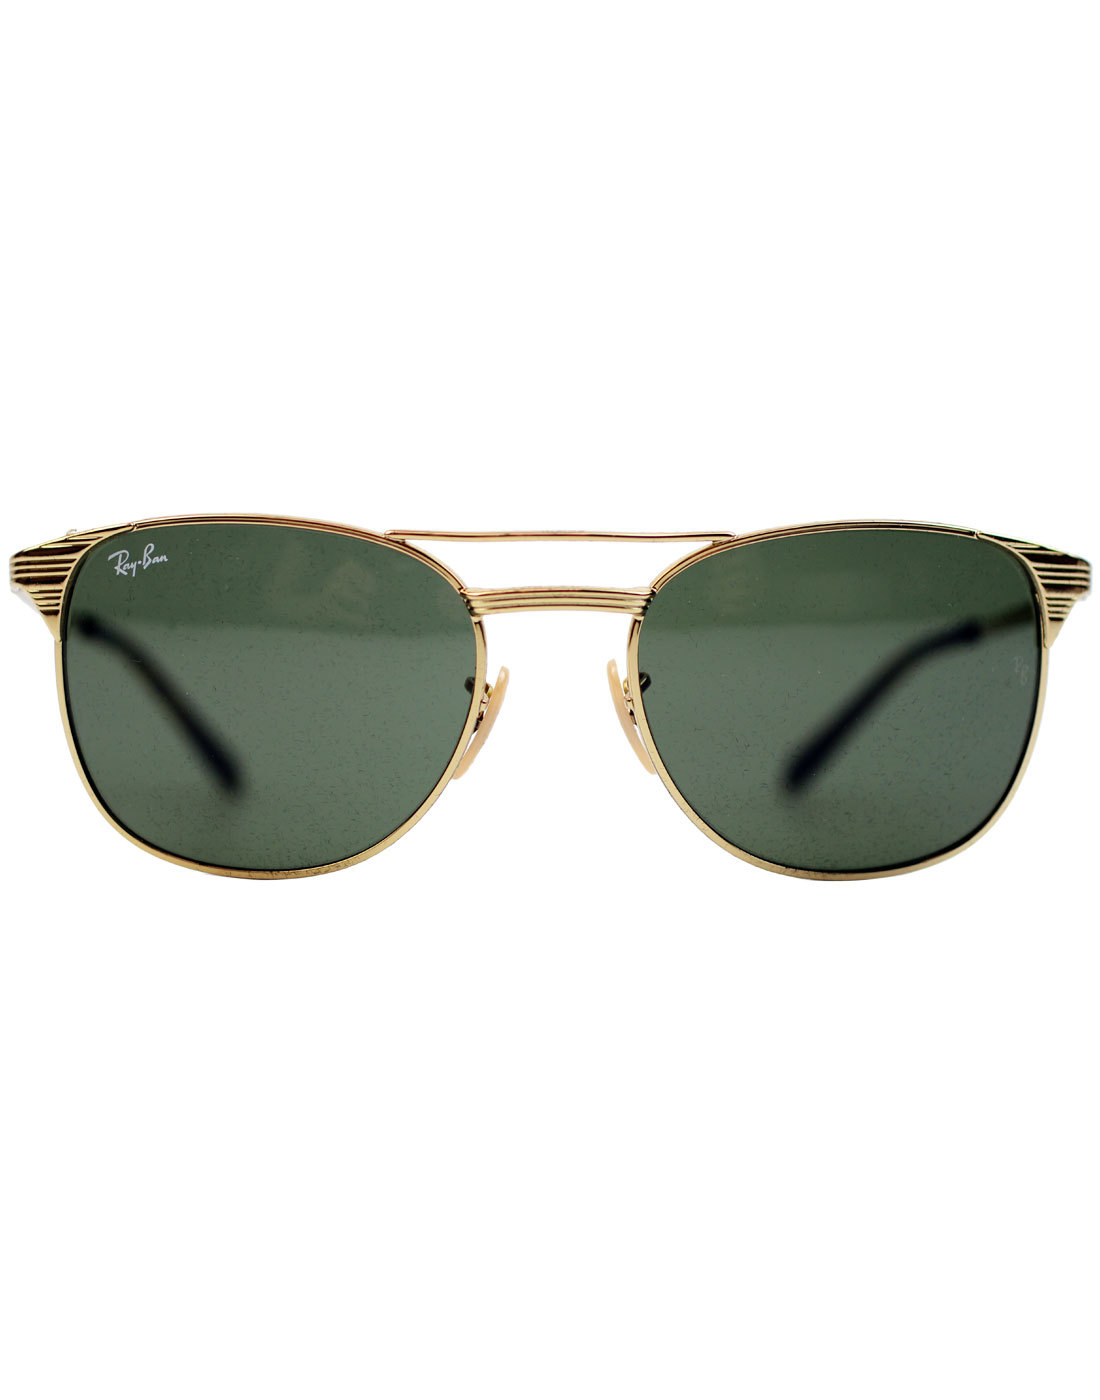 Signet RAY-BAN Retro 50s Icons Sunglasses - Gold